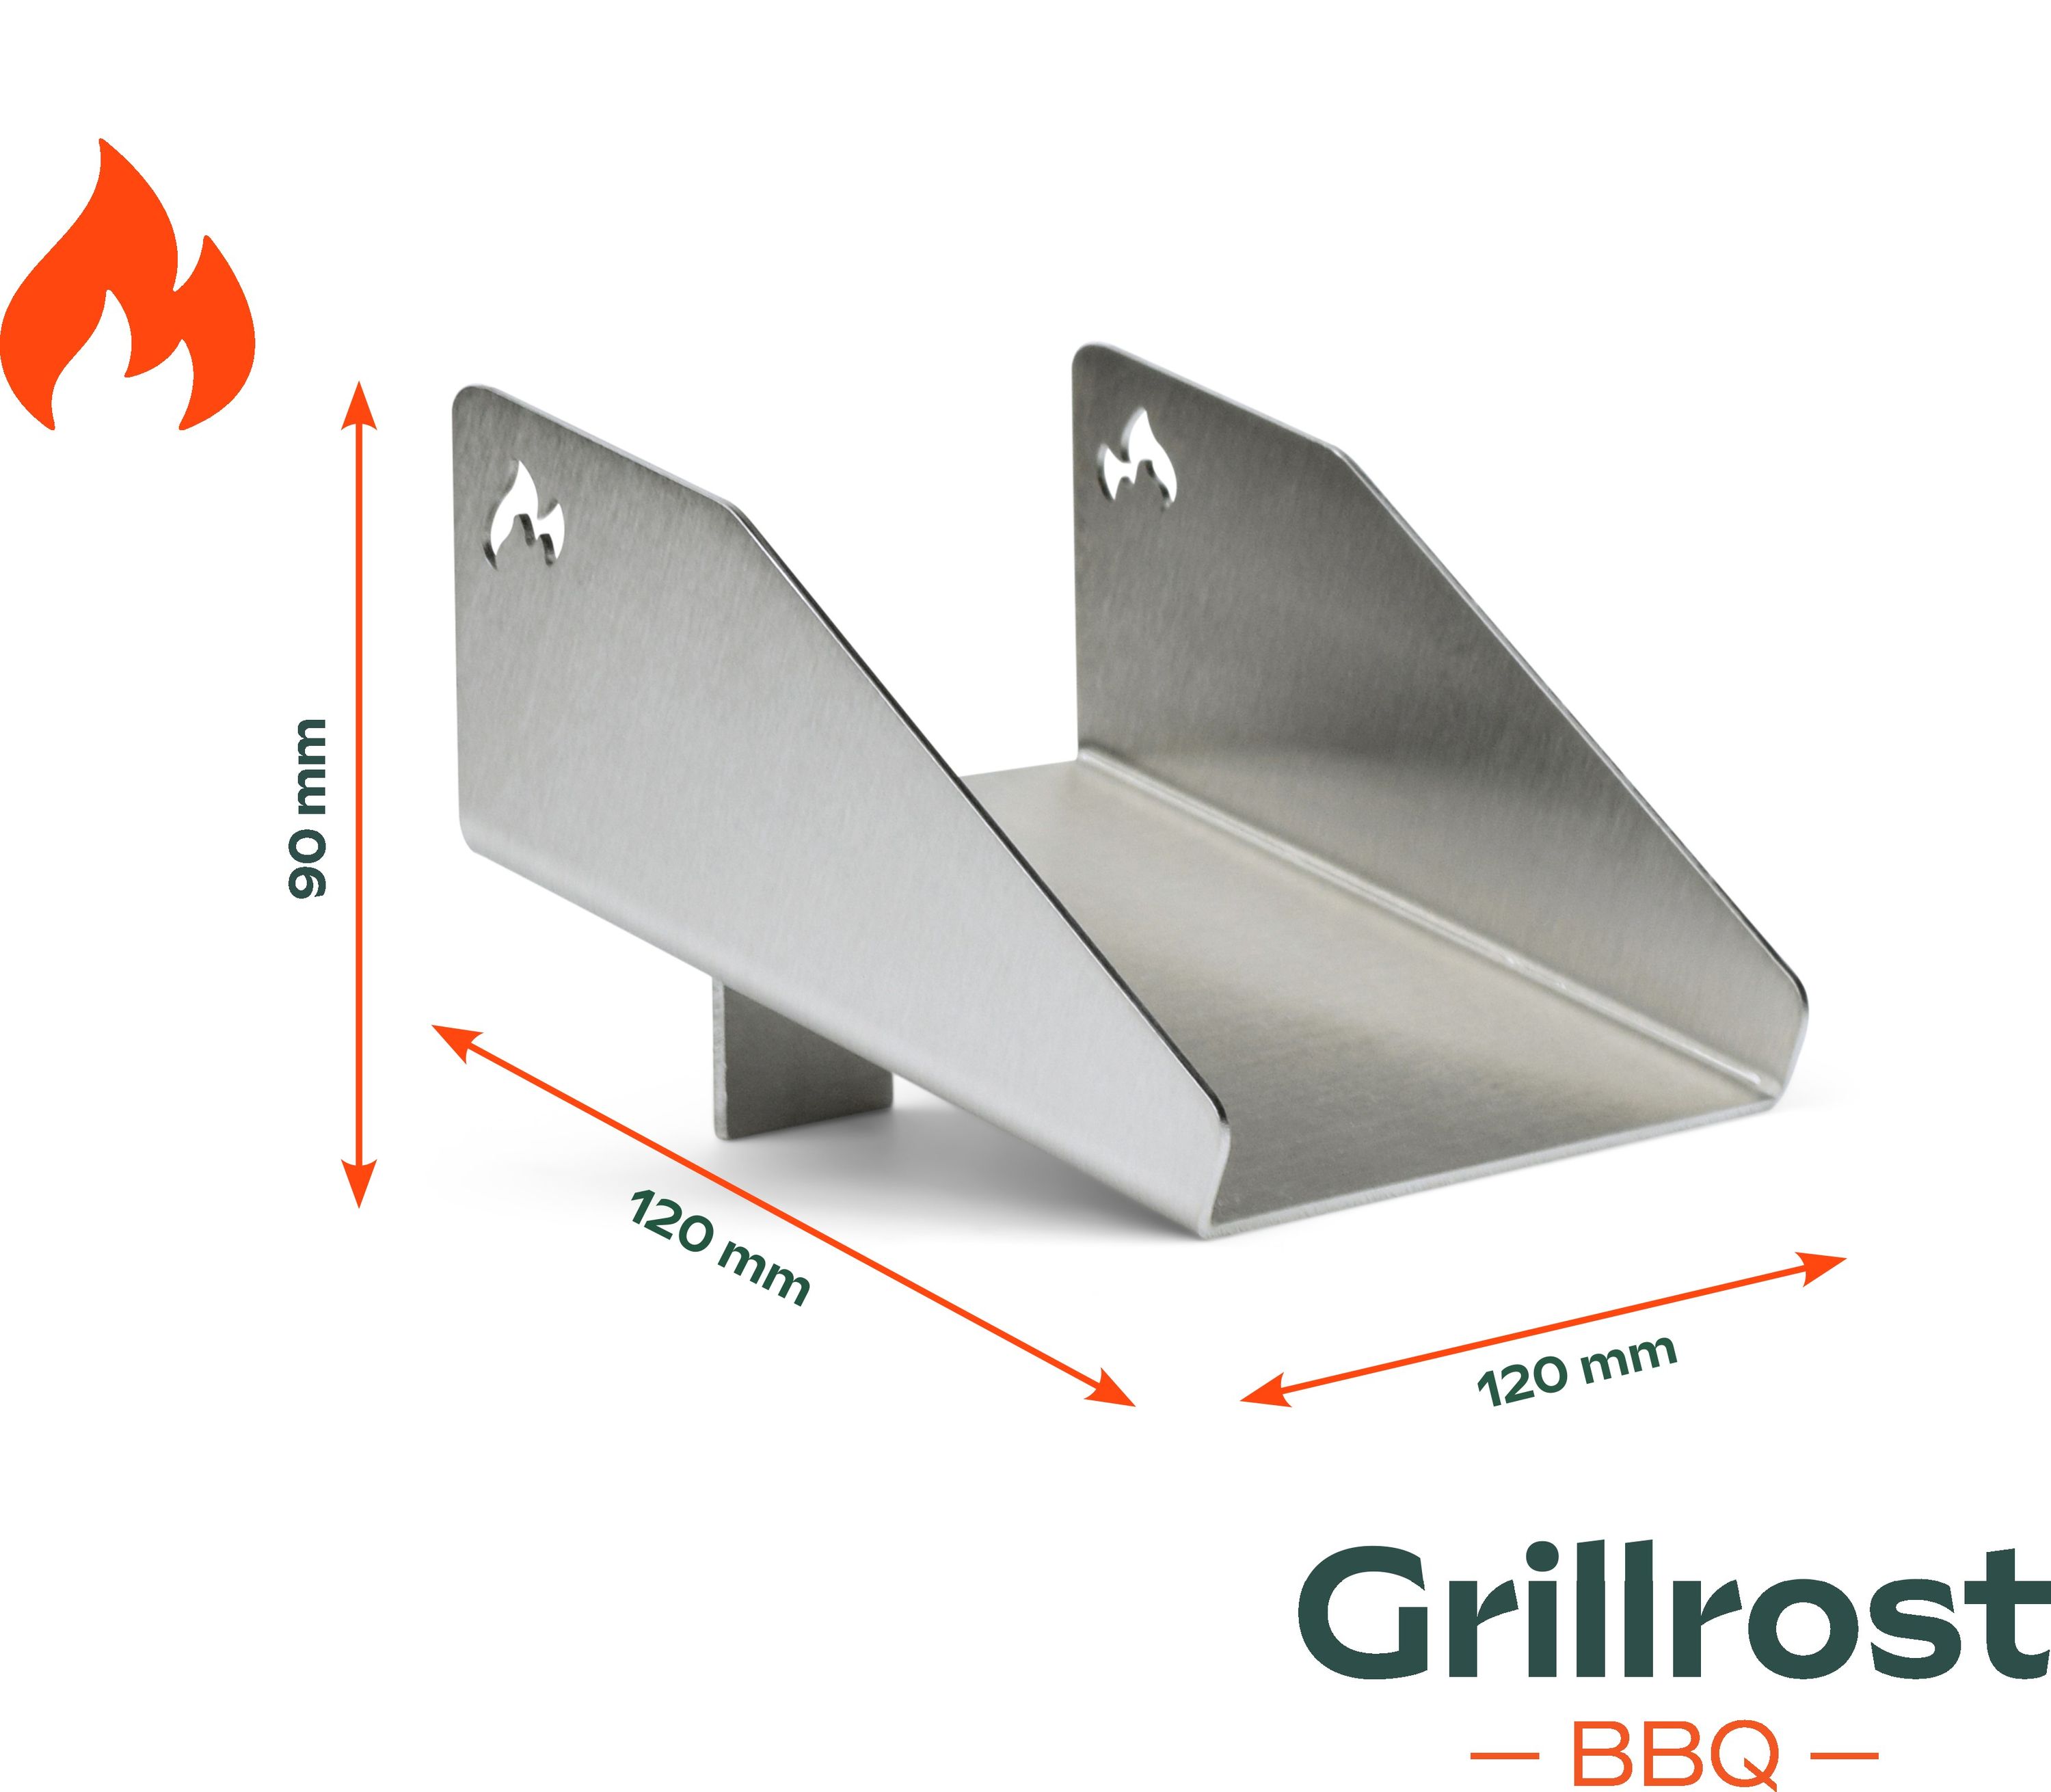 Pellet chute for Traeger grills Pellet funnel with magnetic holder